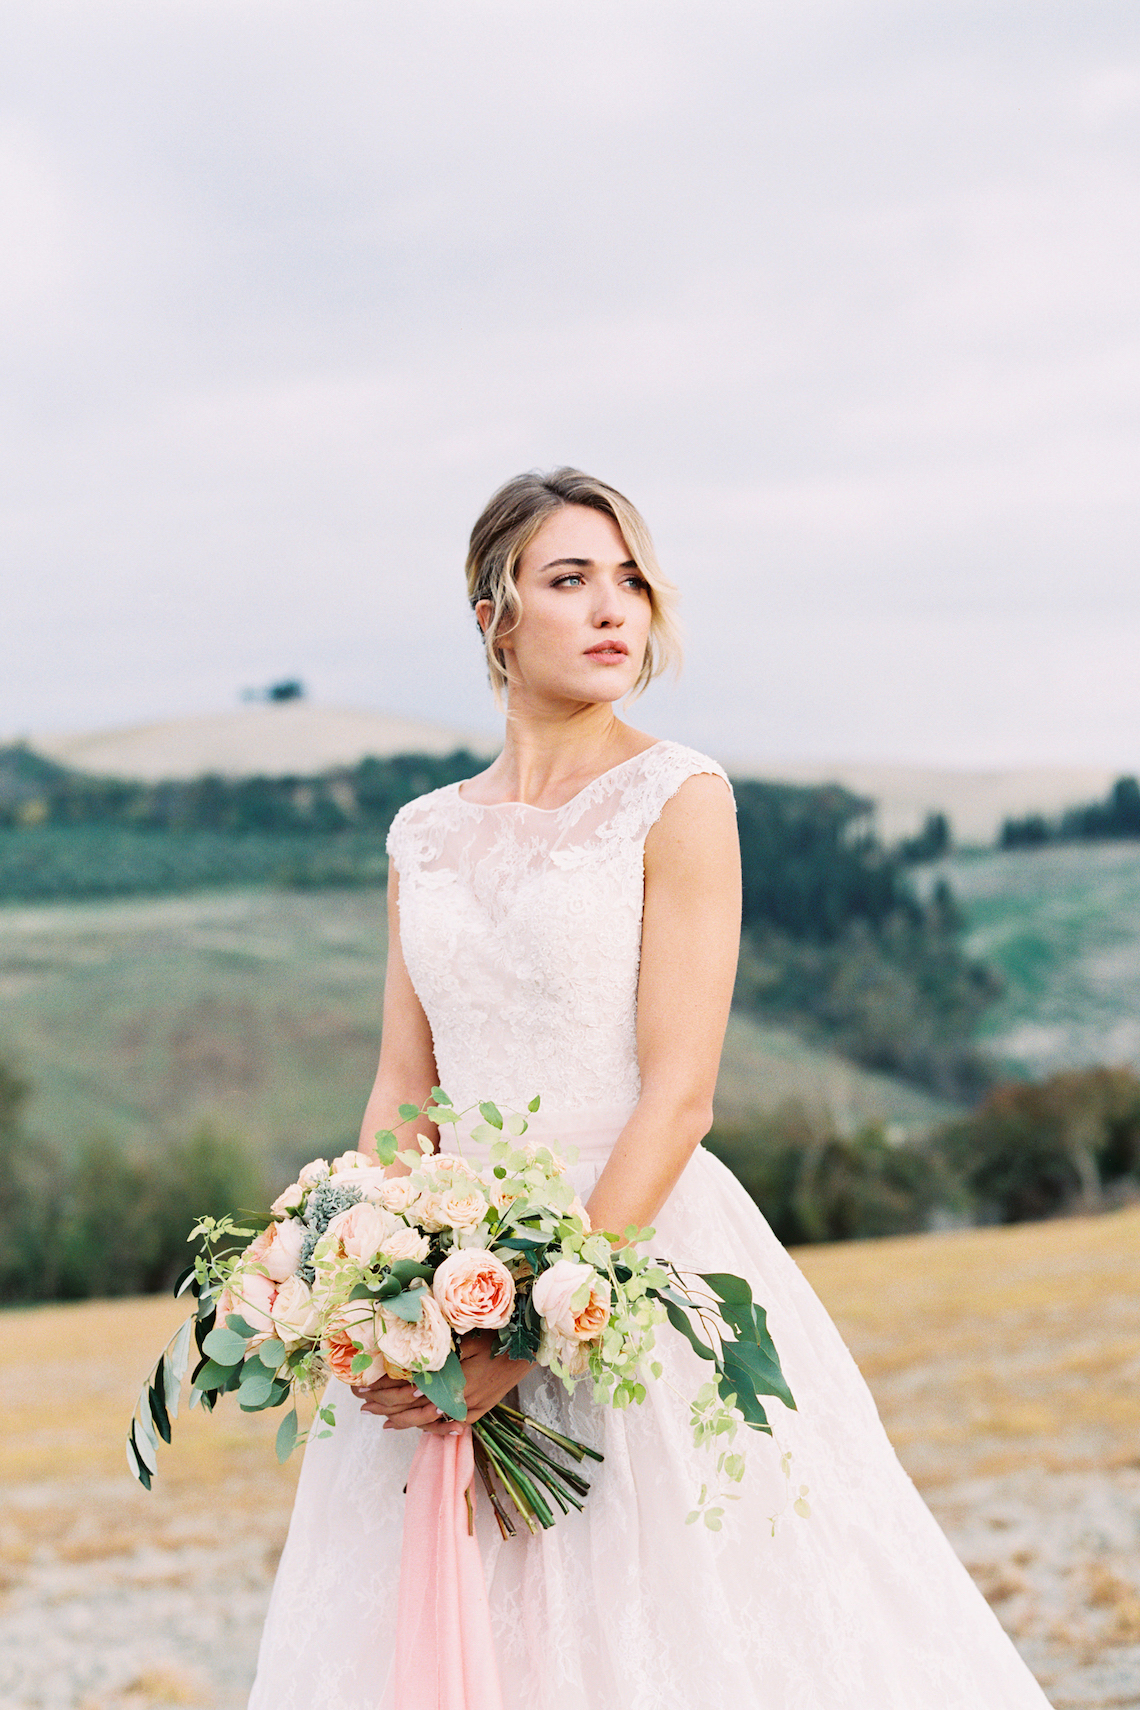 Romantic Italian Countryside Wedding Inspiration | Adrian Wood Photography 50